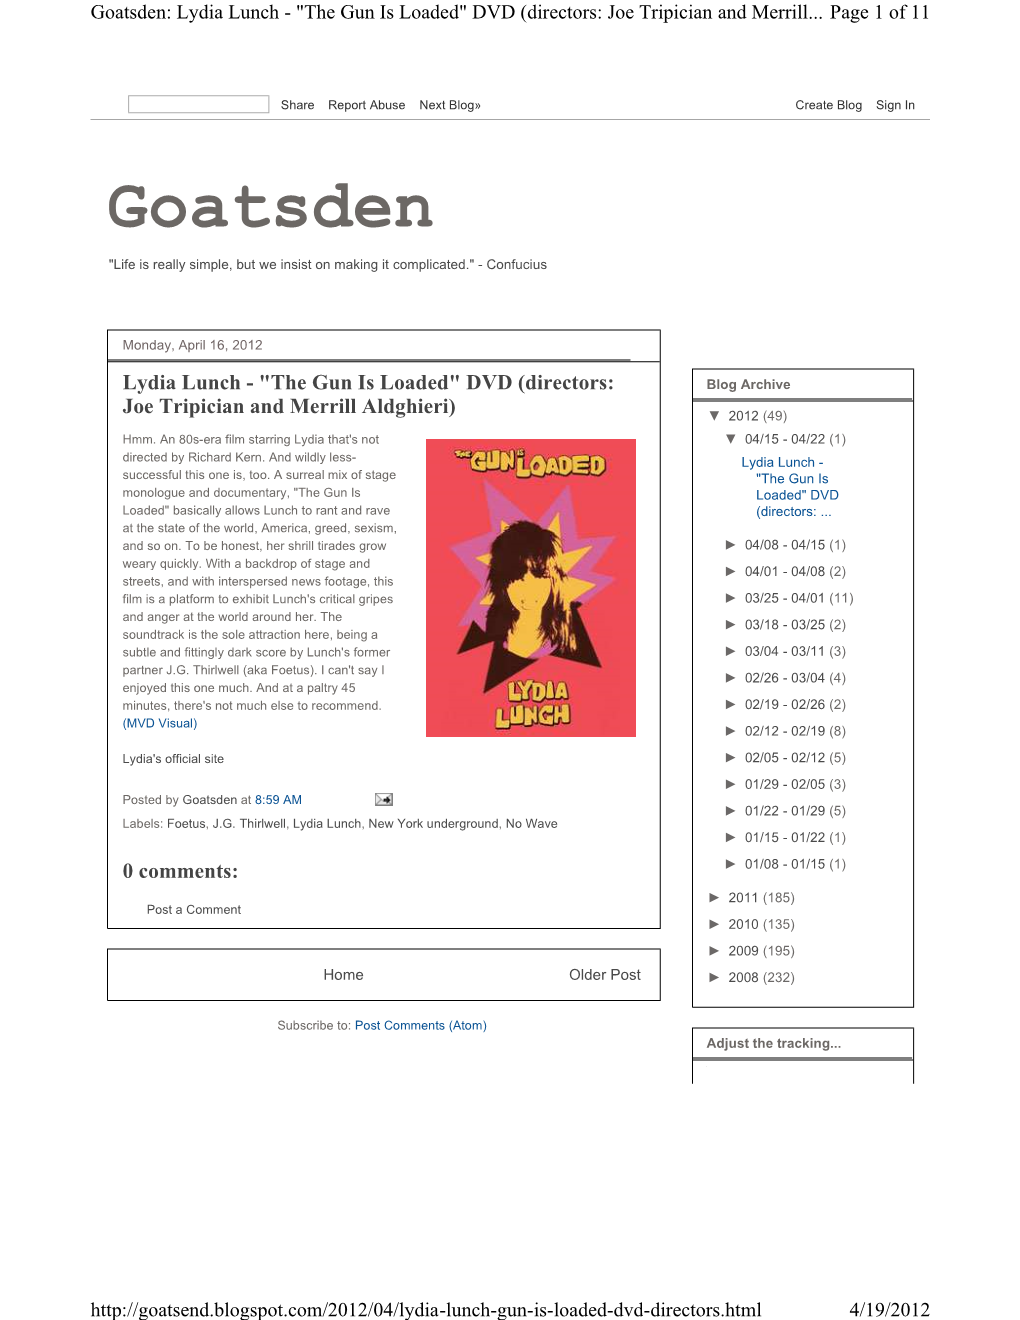 Goatsden: Lydia Lunch - "The Gun Is Loaded" DVD (Directors: Joe Tripician and Merrill